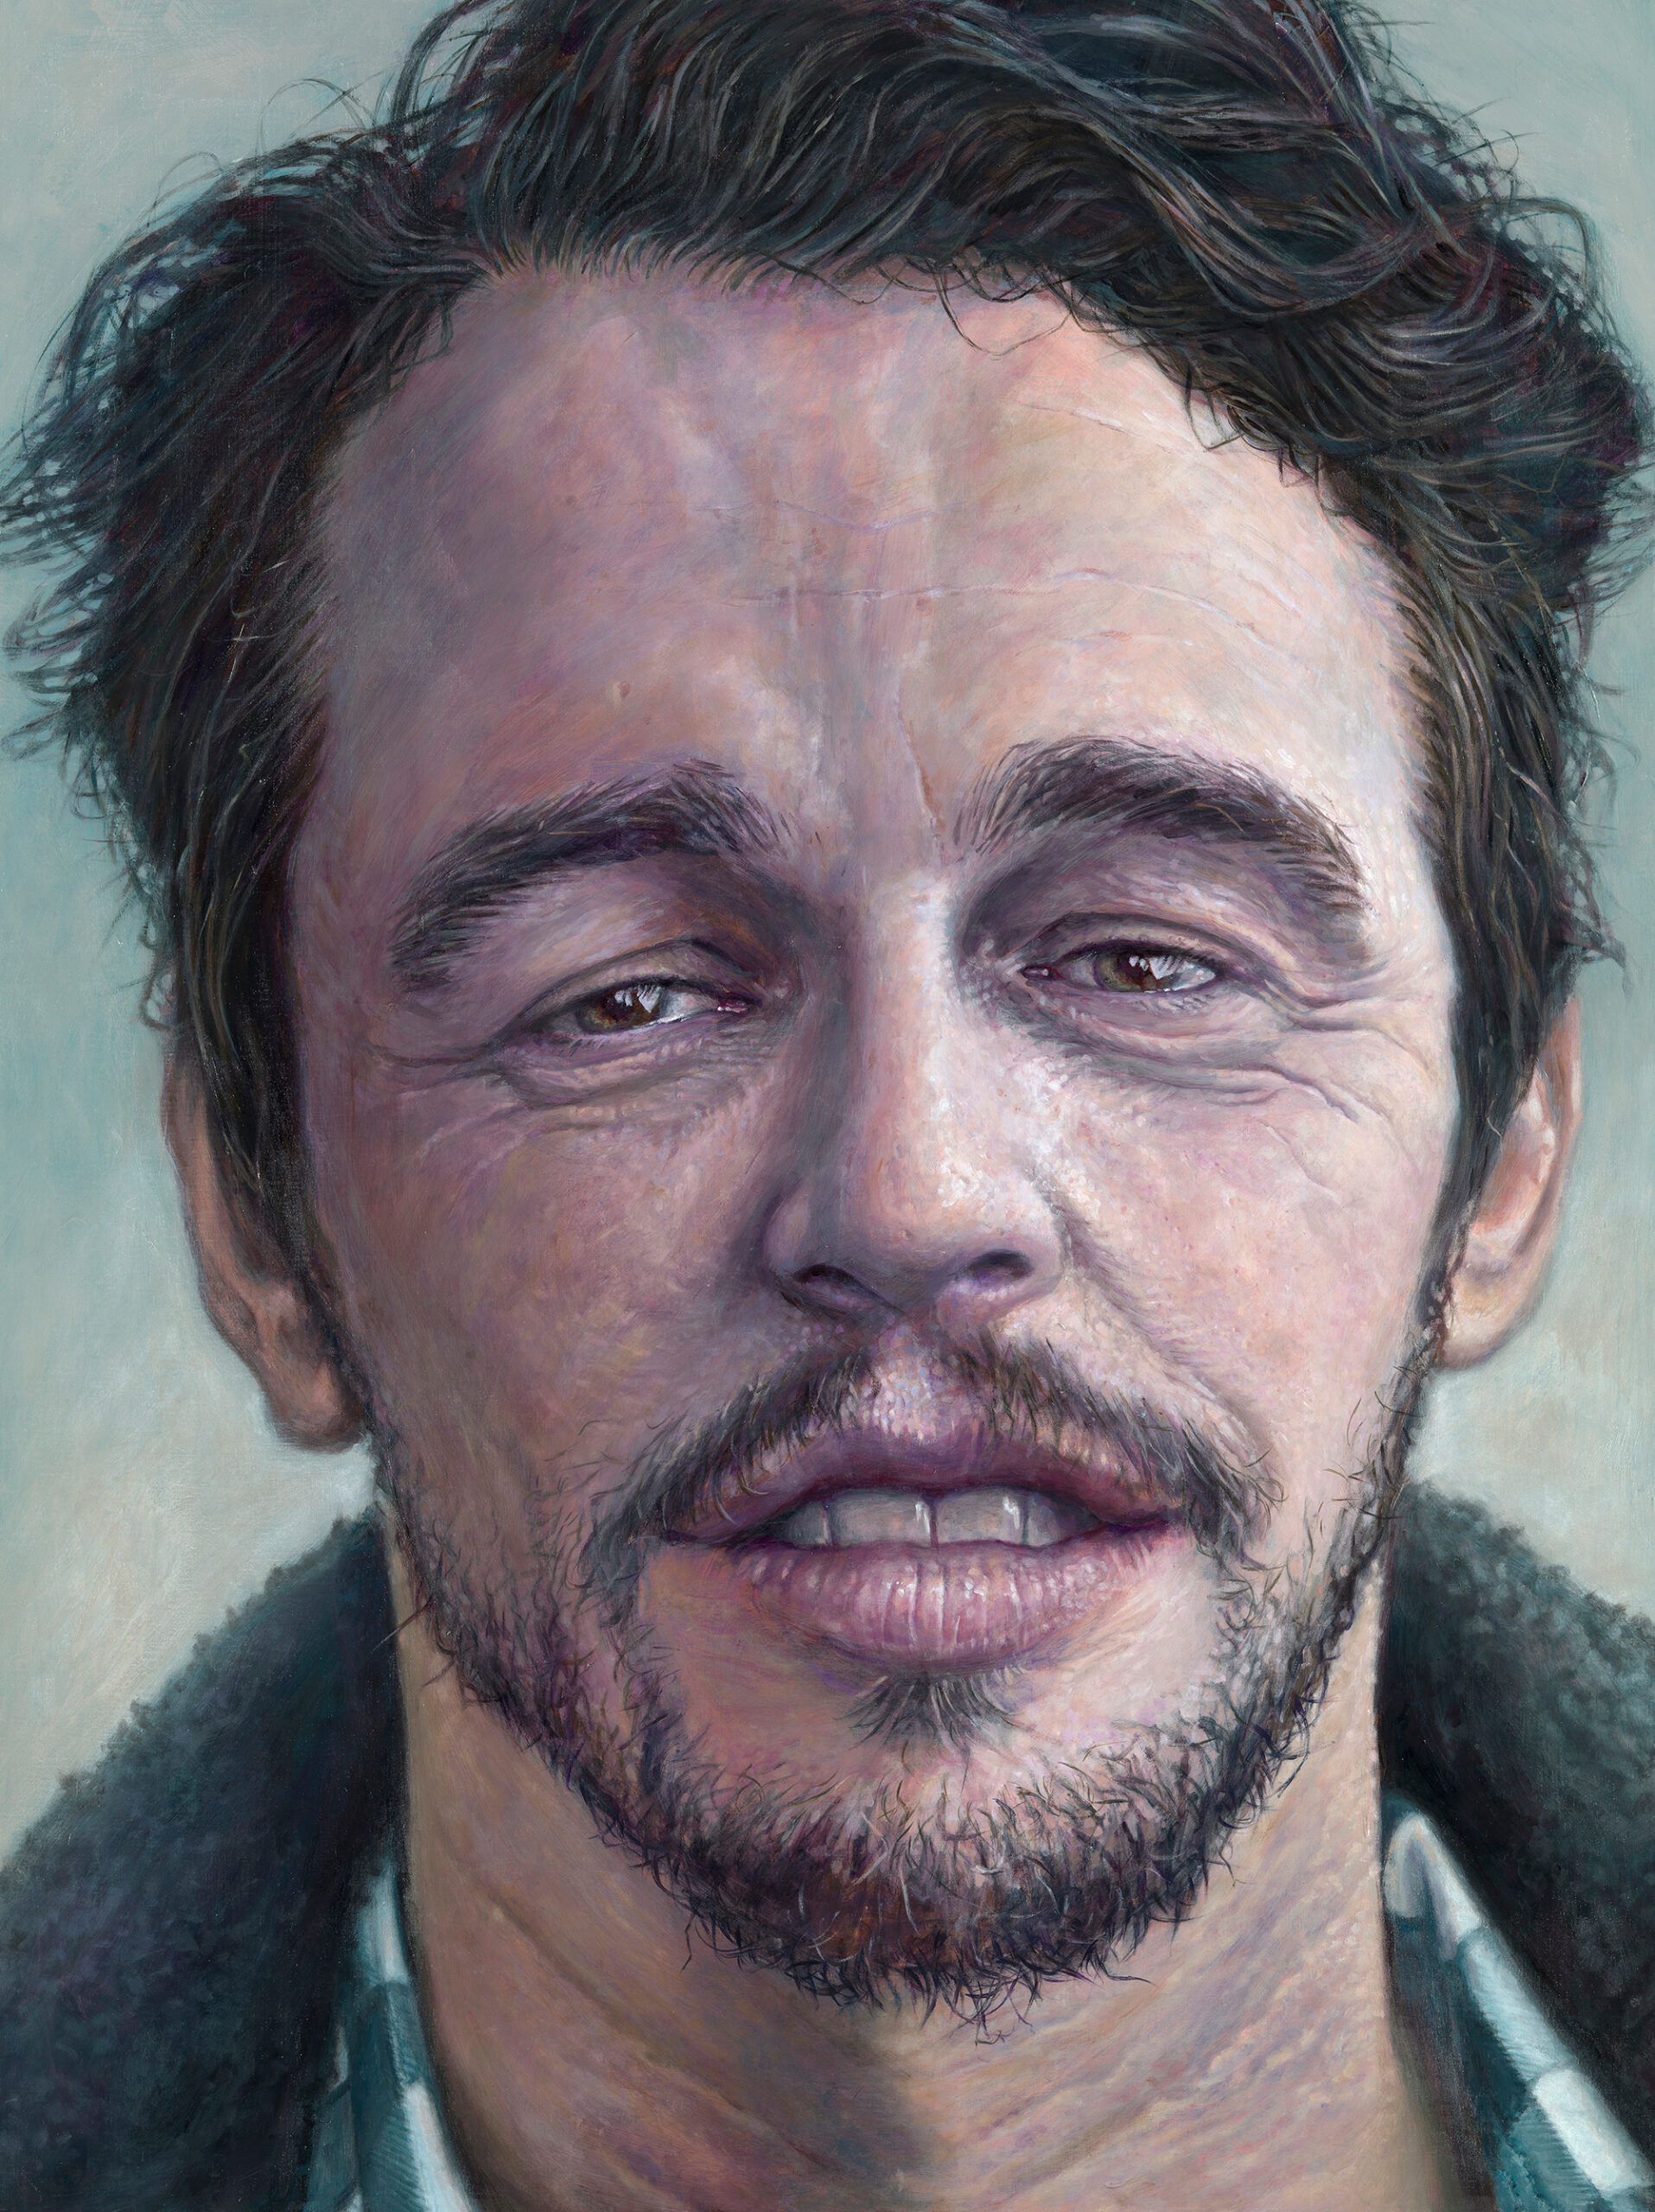 James Franco portrait by Derren Brown